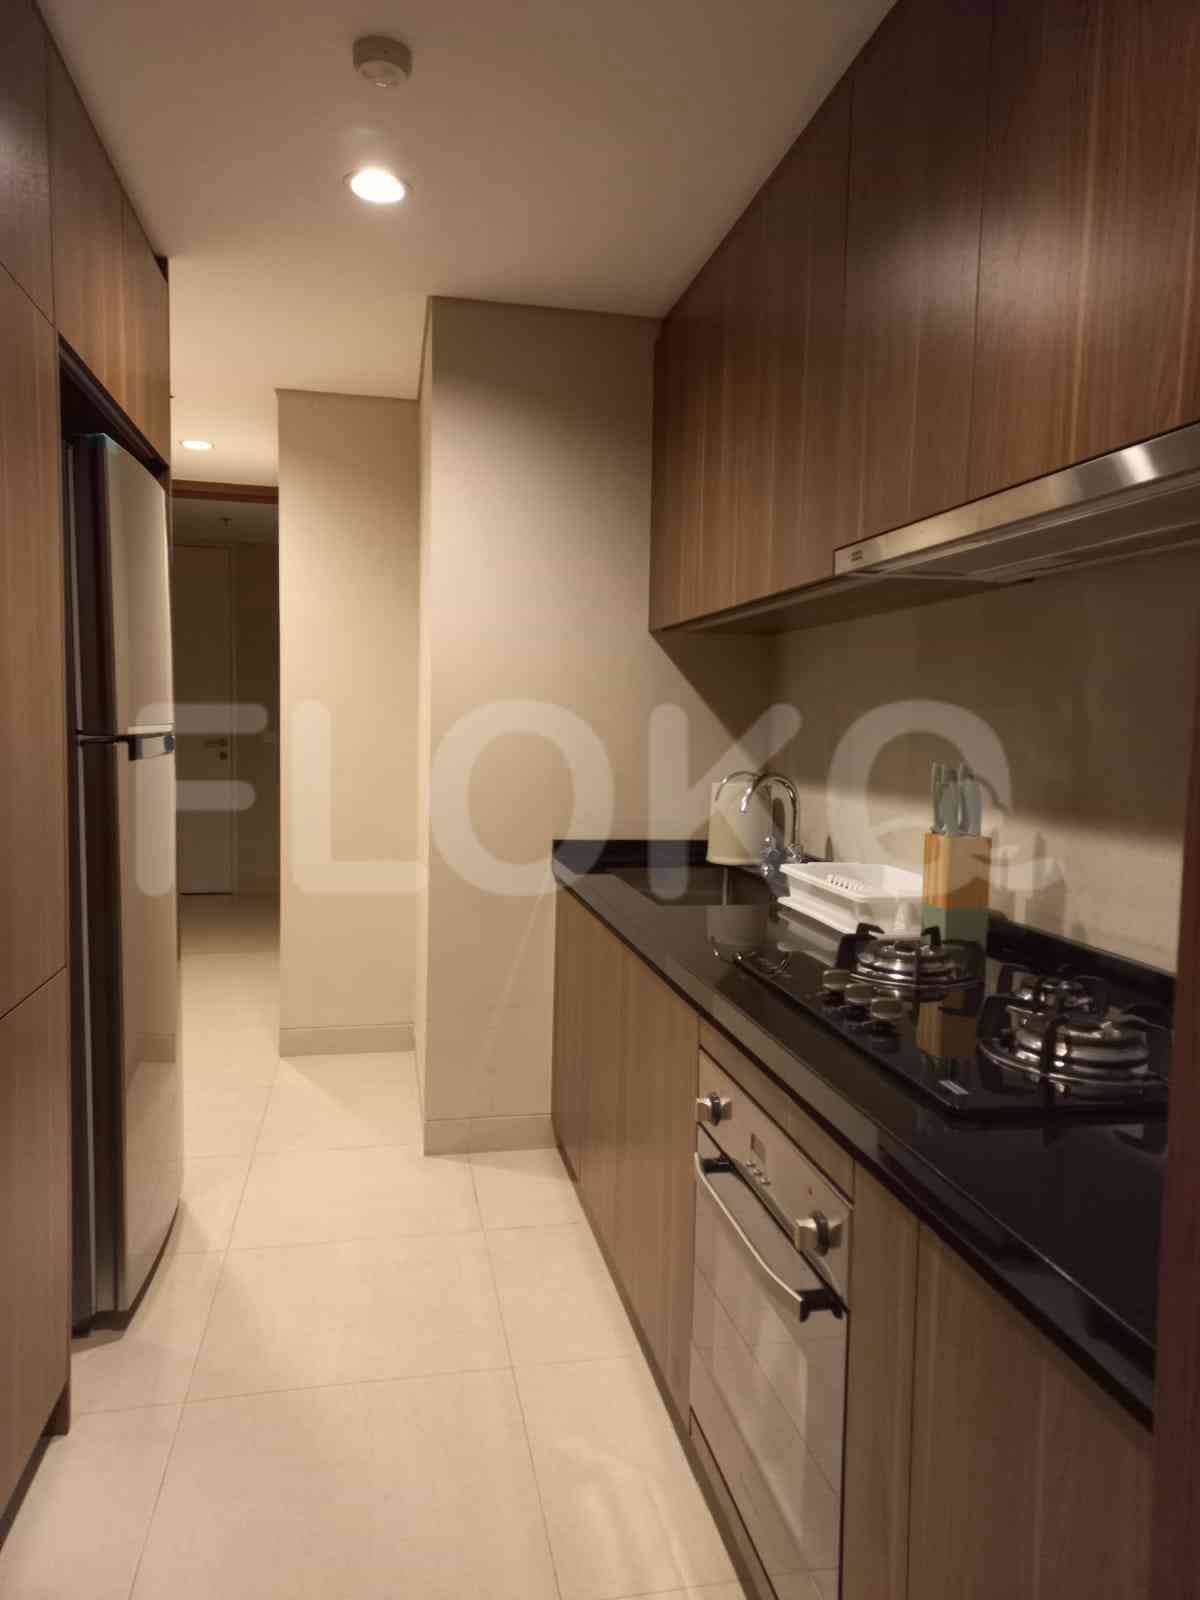 2 Bedroom on 5th Floor for Rent in Apartemen Branz Simatupang - ftb525 3